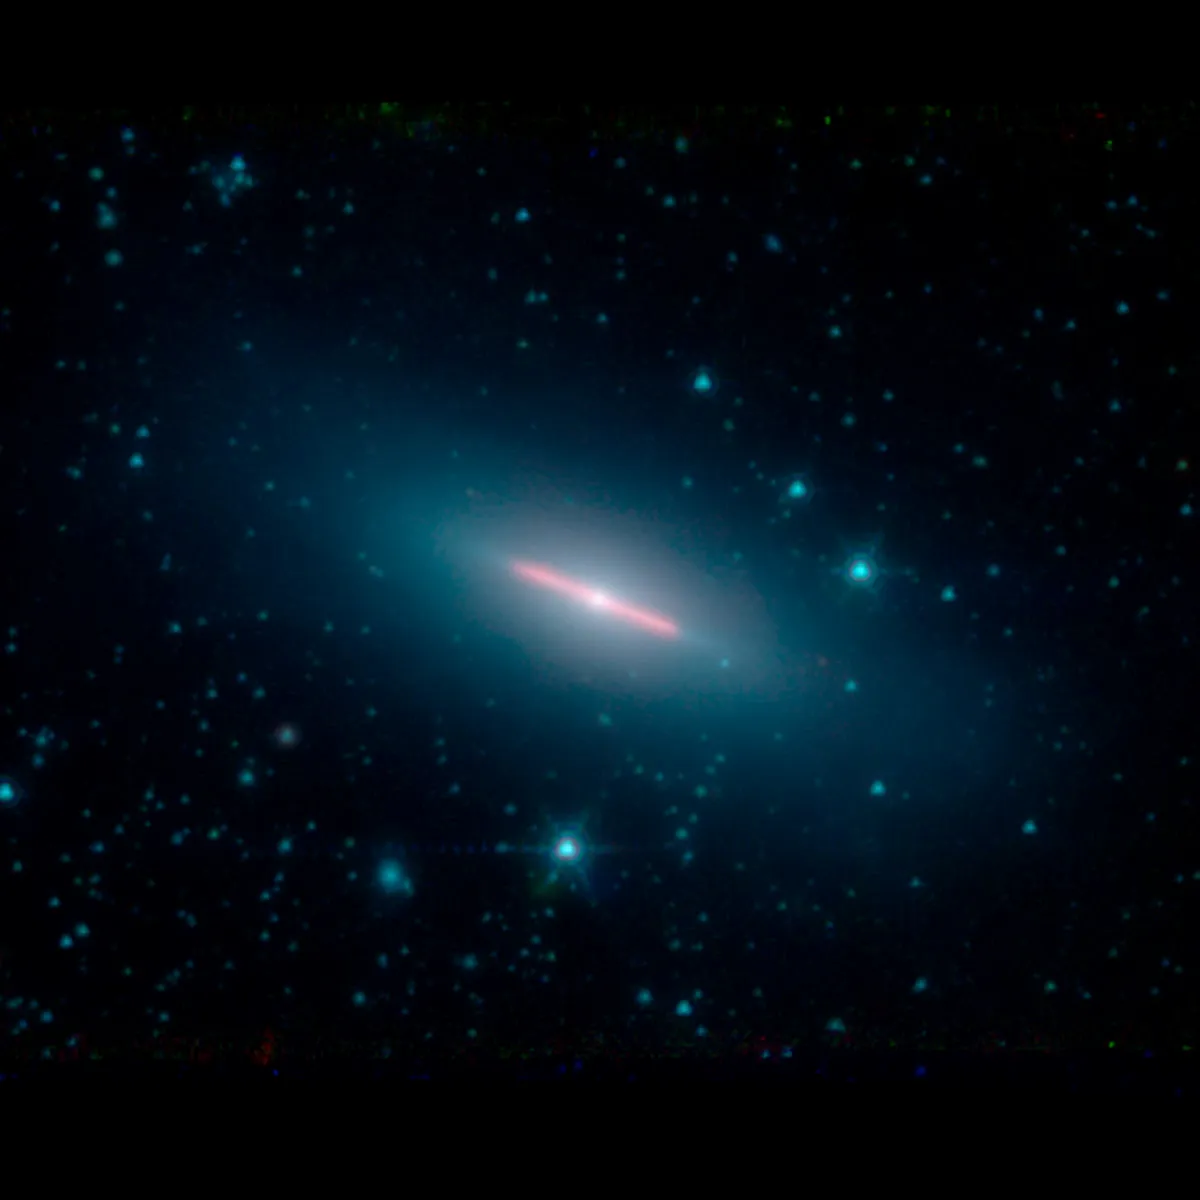 Spitzer Spots a Perfectly Sideways Galaxy. Credit: NASA/JPL-Caltech